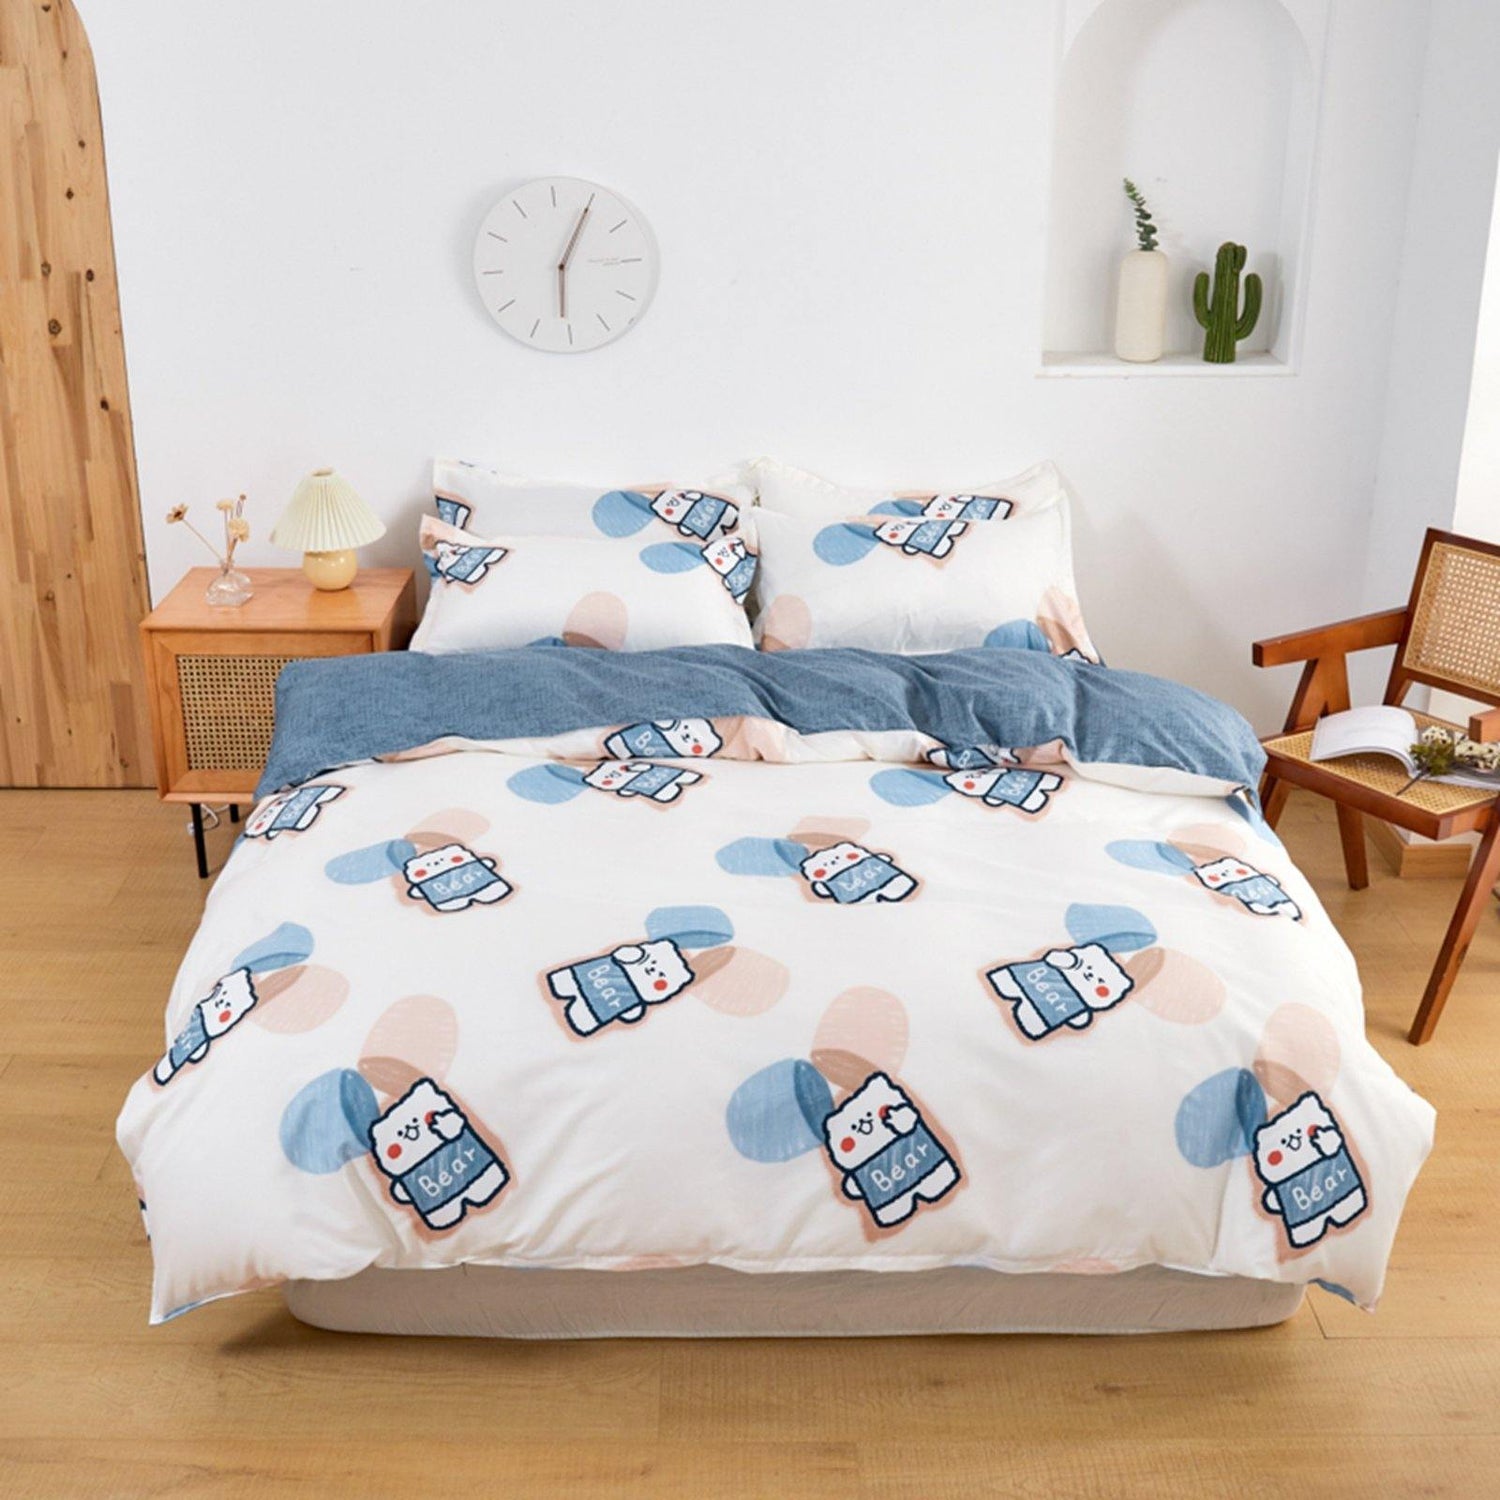 WONGS BEDDING Cute Style Duvet Cover Set - Wongs bedding